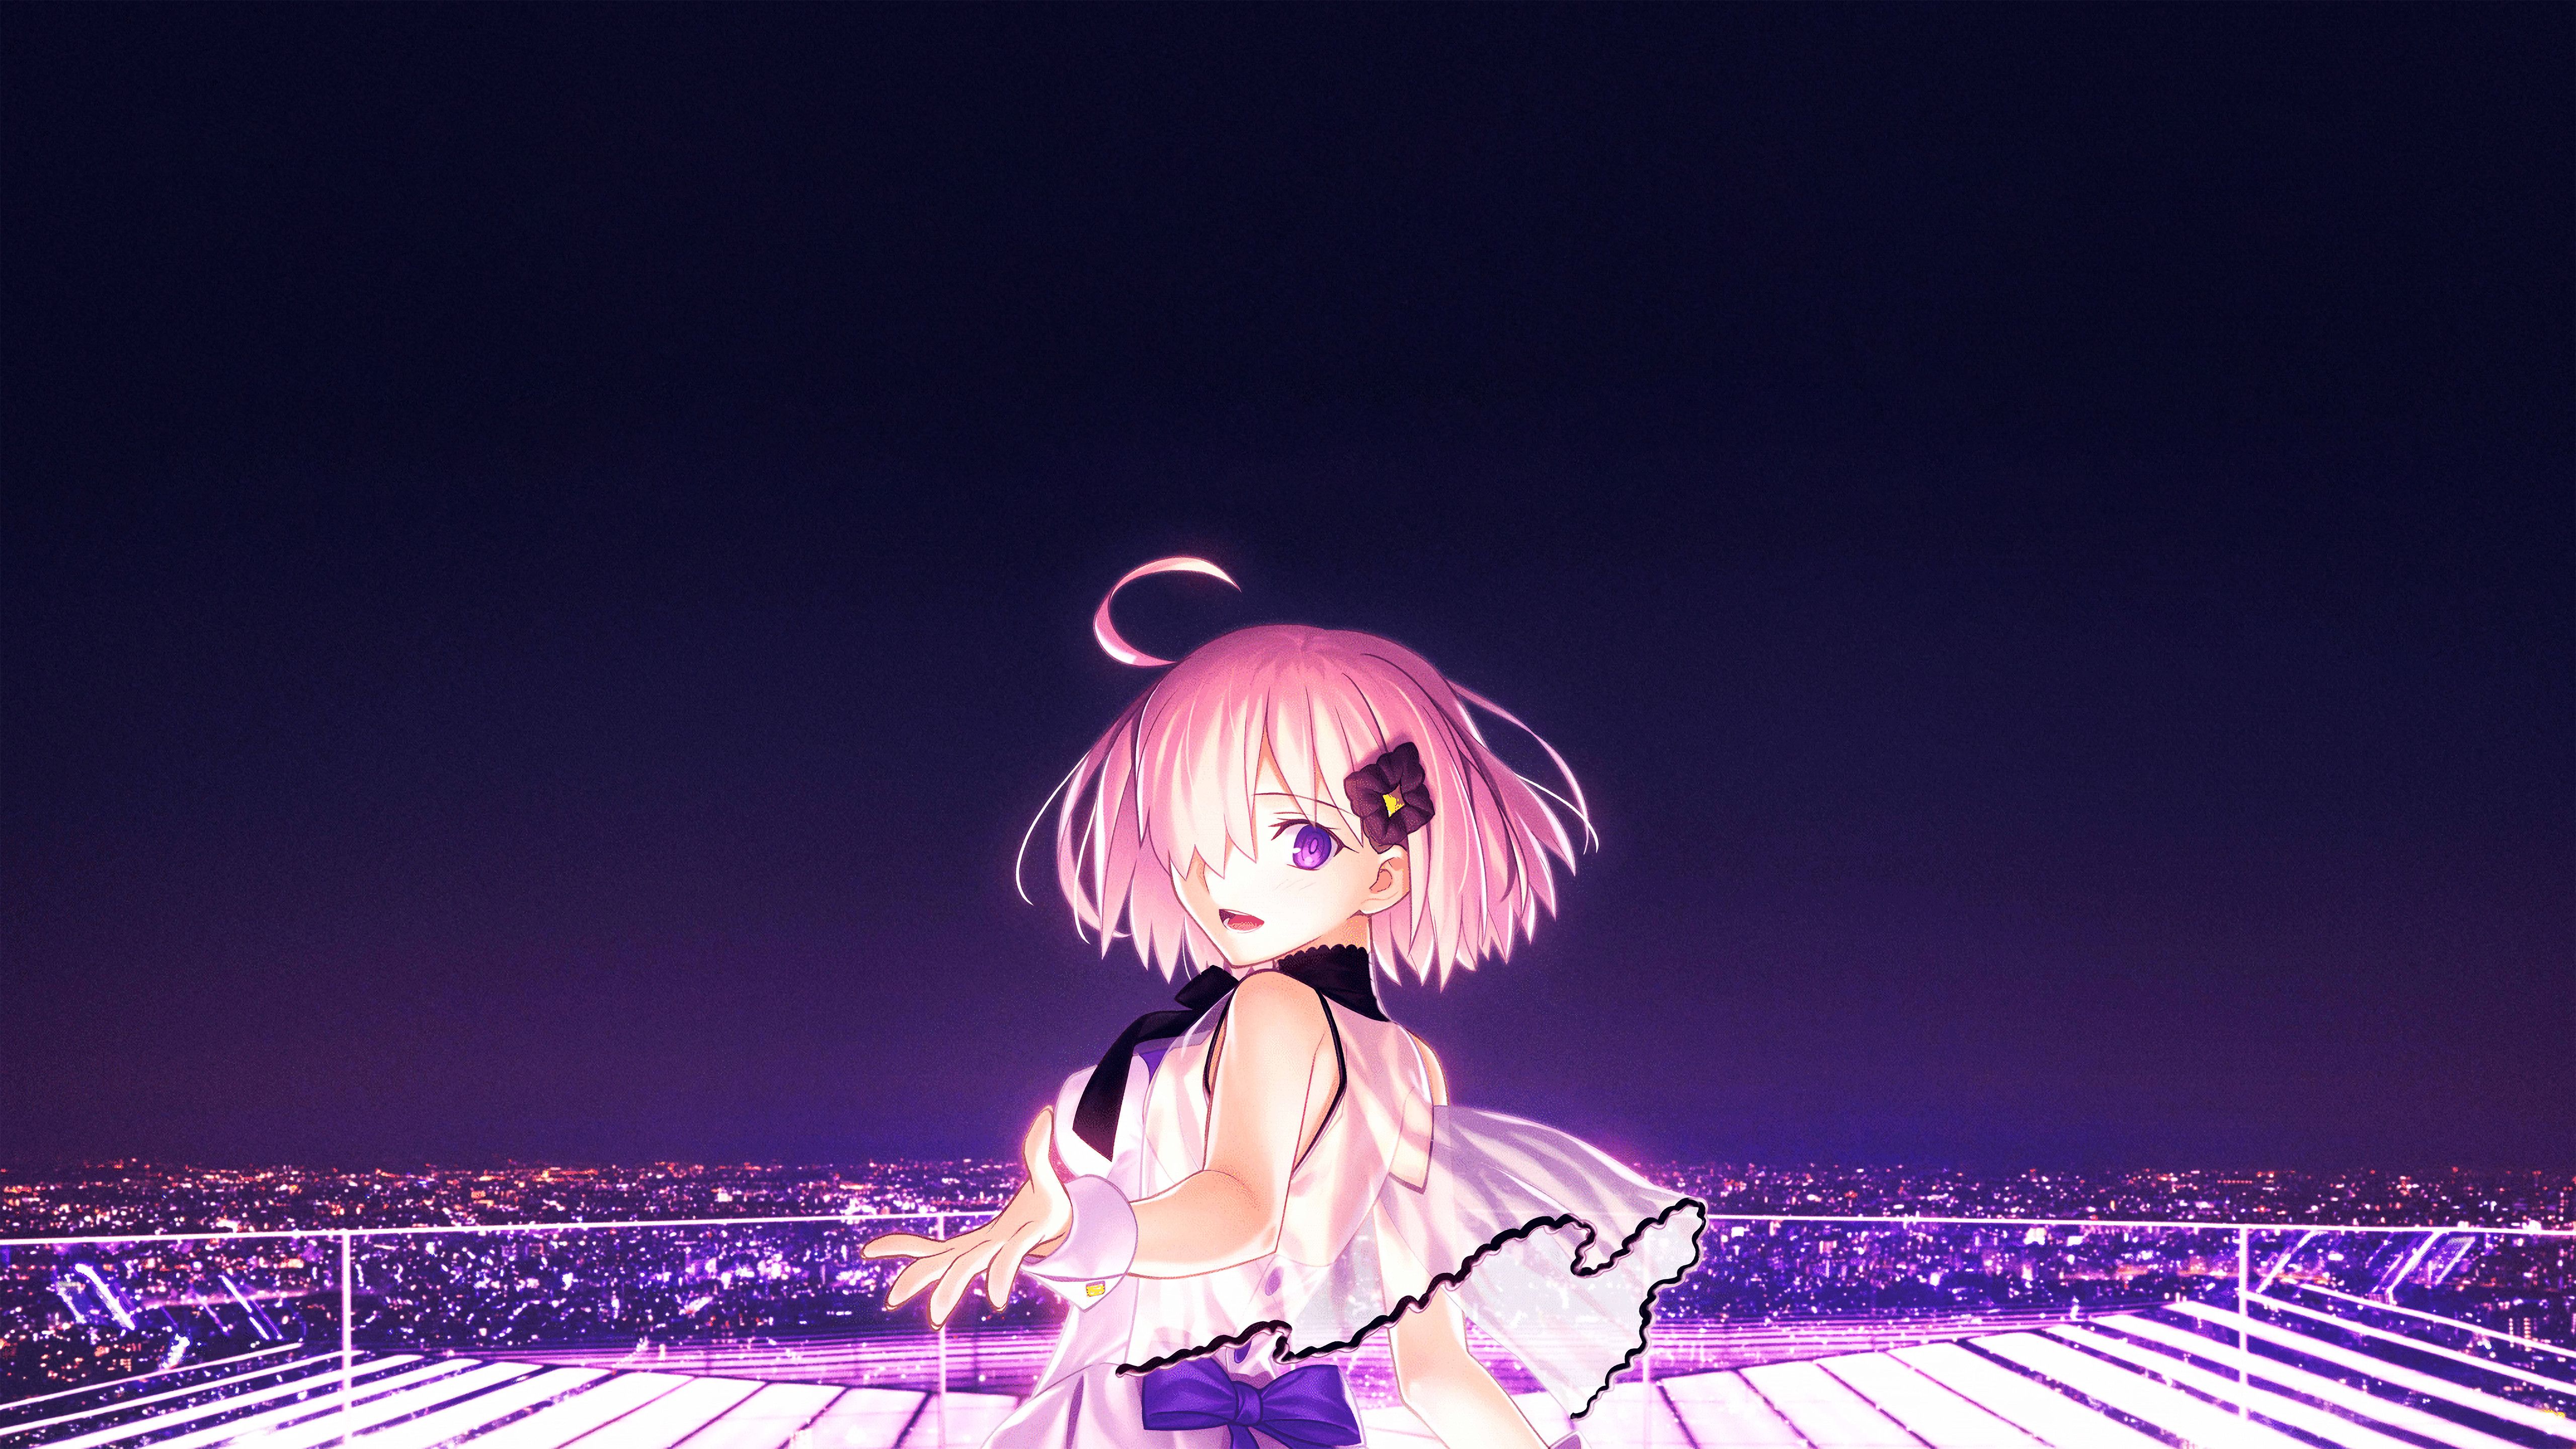 Wallpaper, purple eyes, city lights, pink hair, anime girls 5120x2880